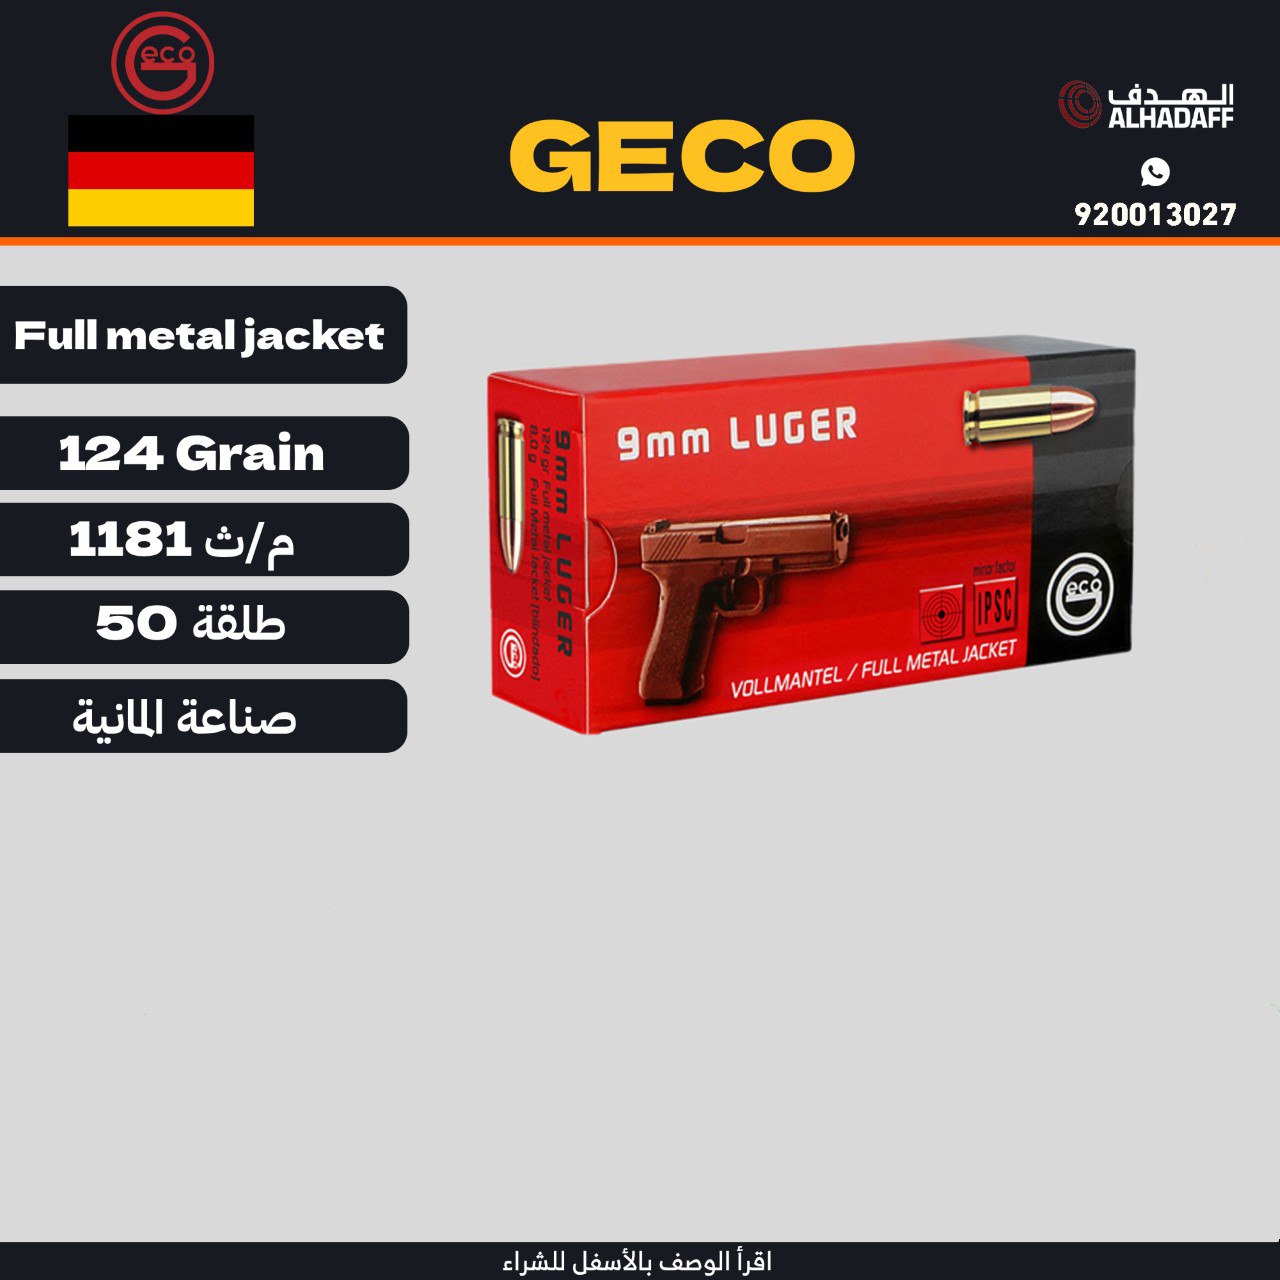 GECO 9MM LUGER FULL METAL JACKET 124 Grain 50 RoundS